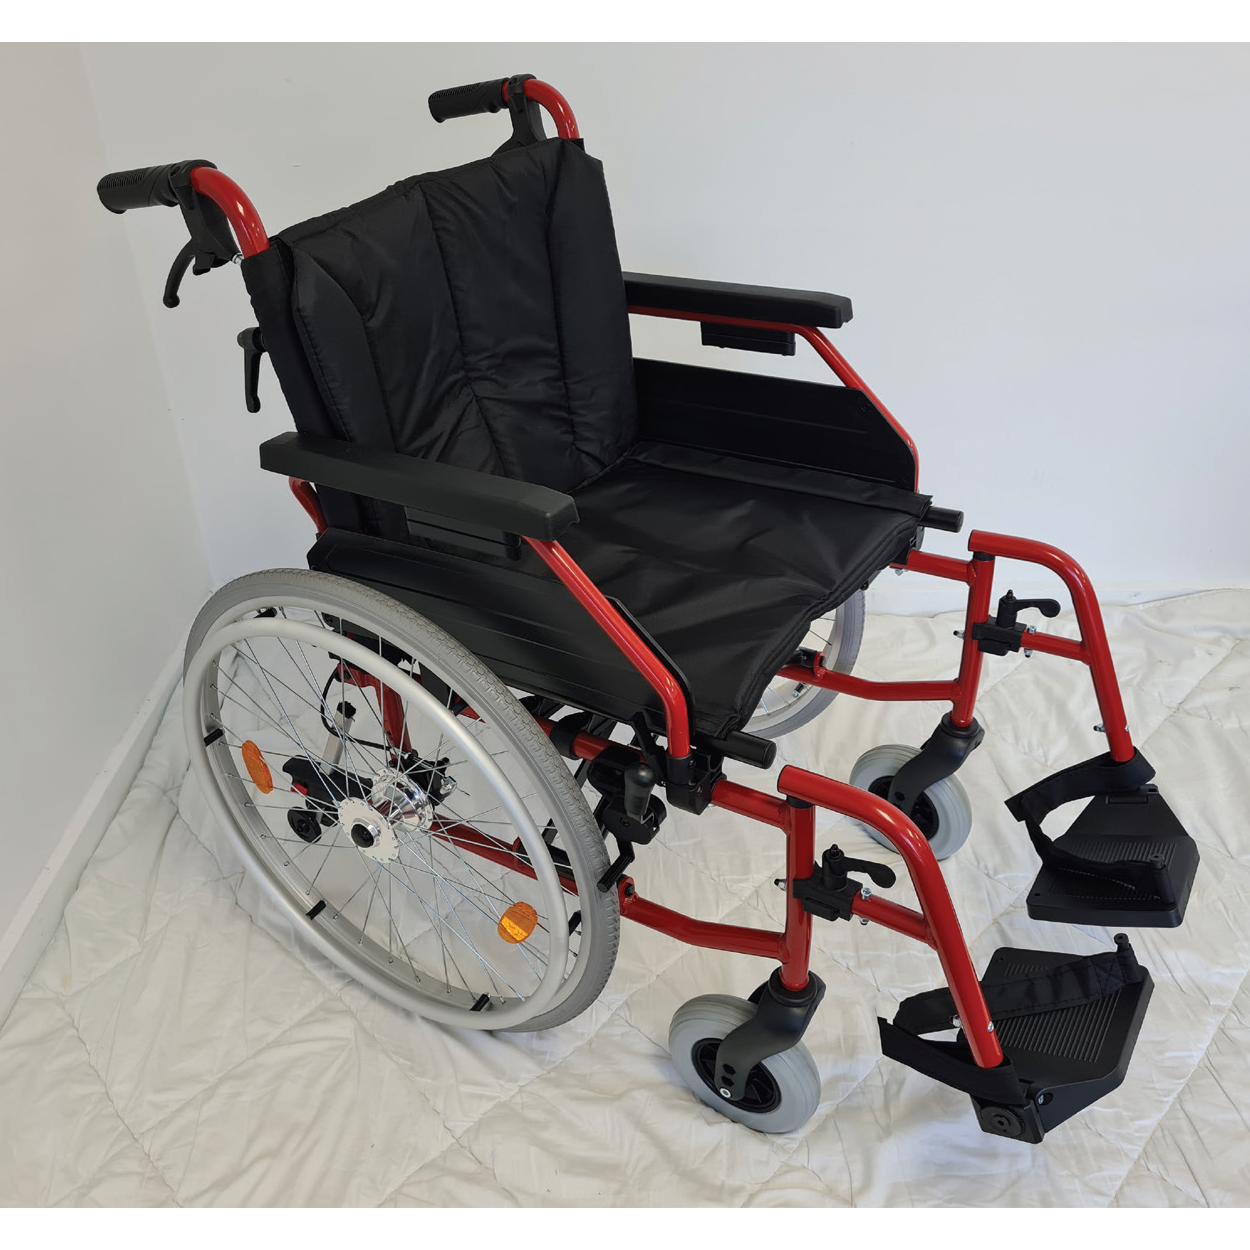 Rothcare Adjustor Manual Wheelchair